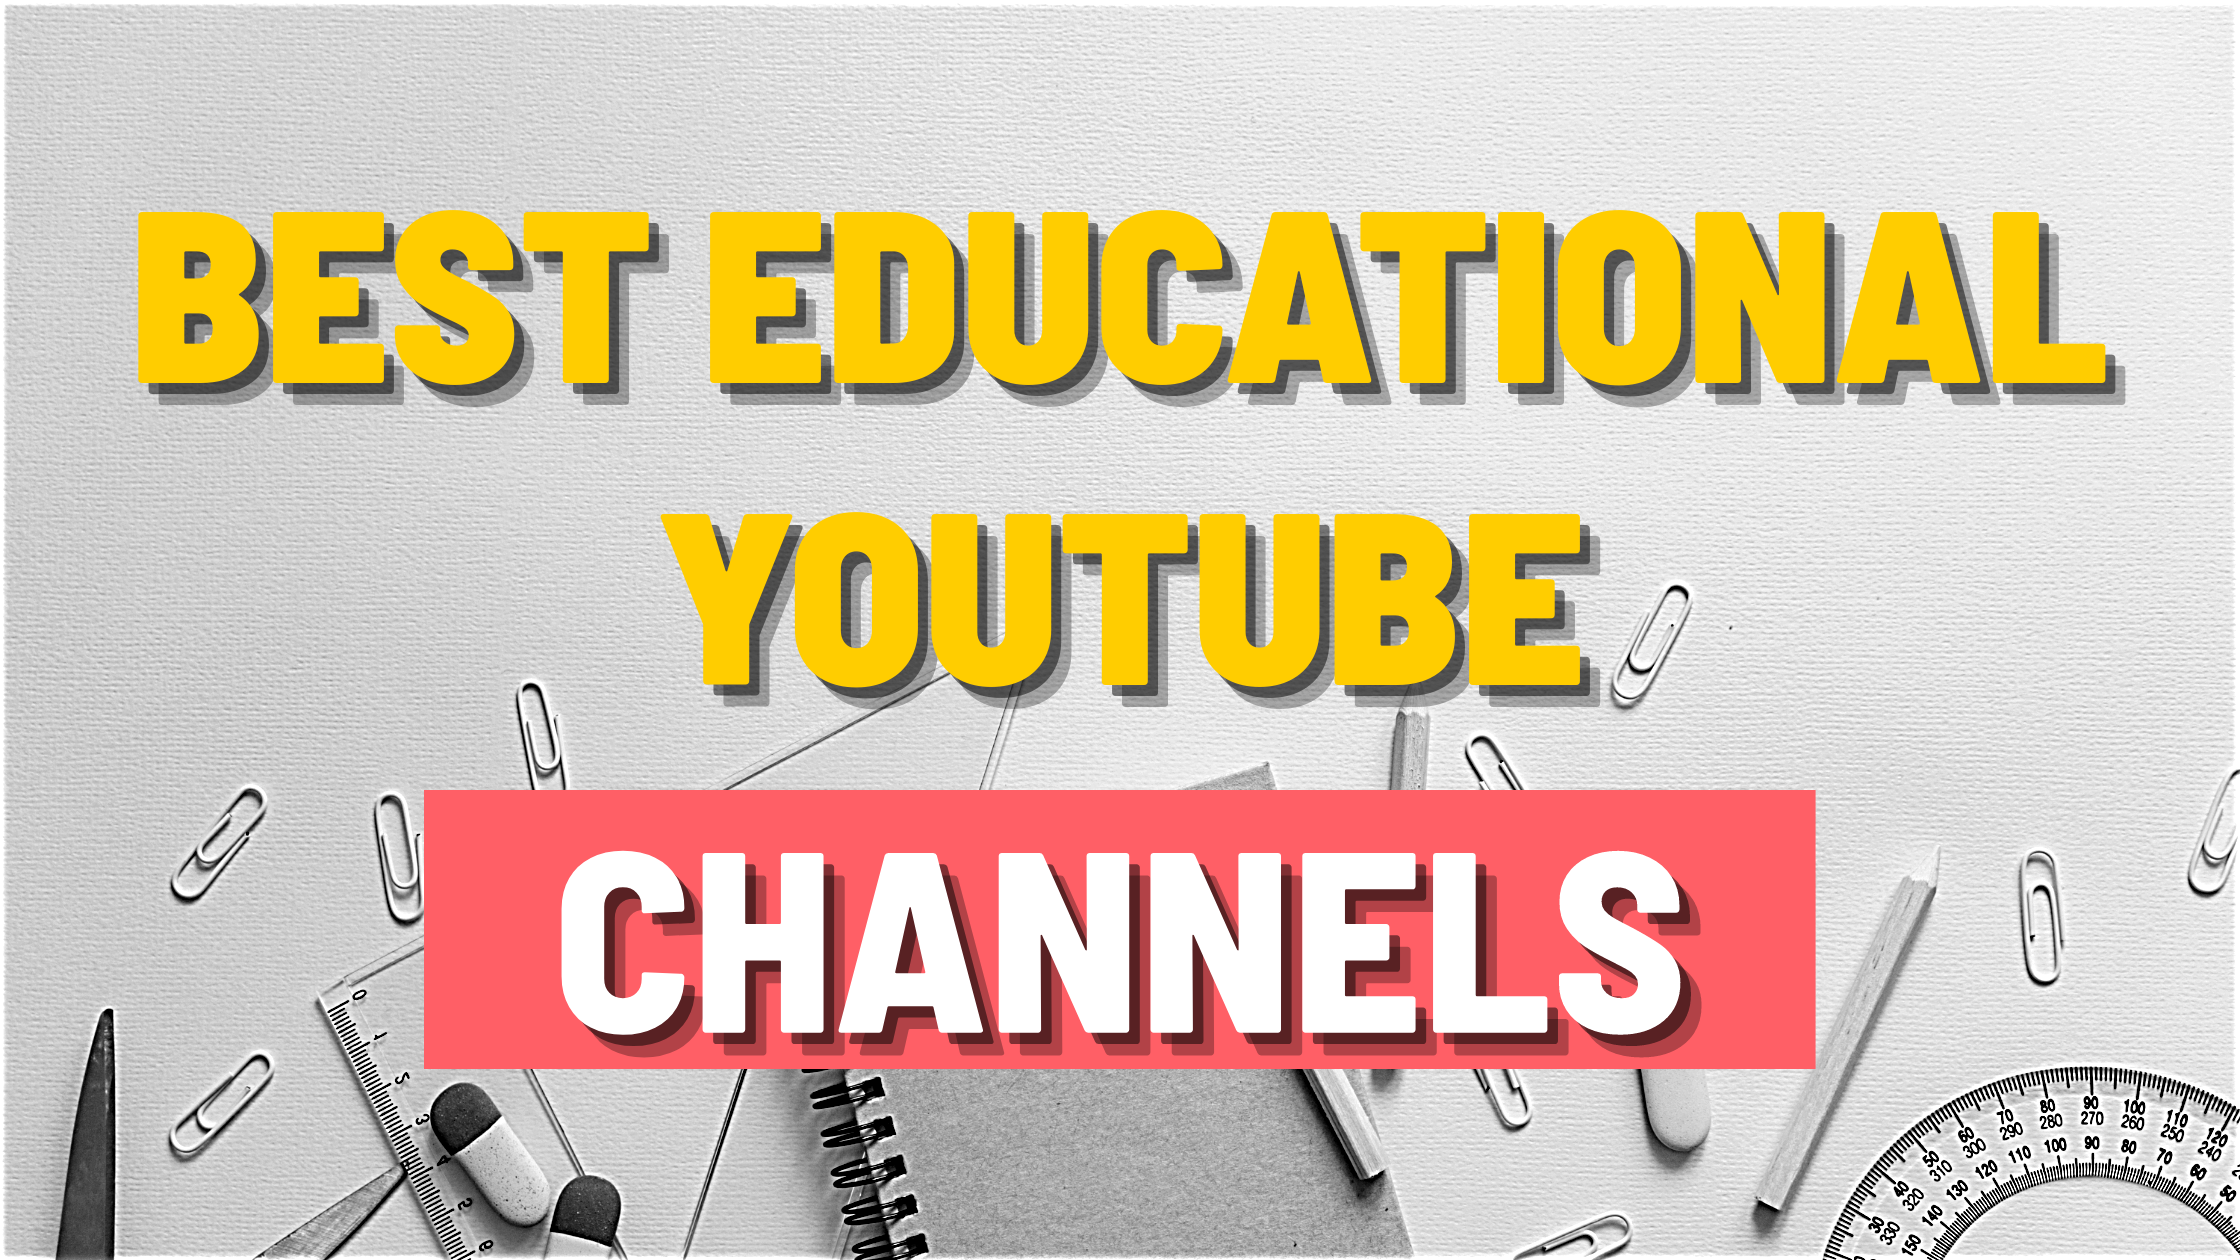 Best educational YouTube channels